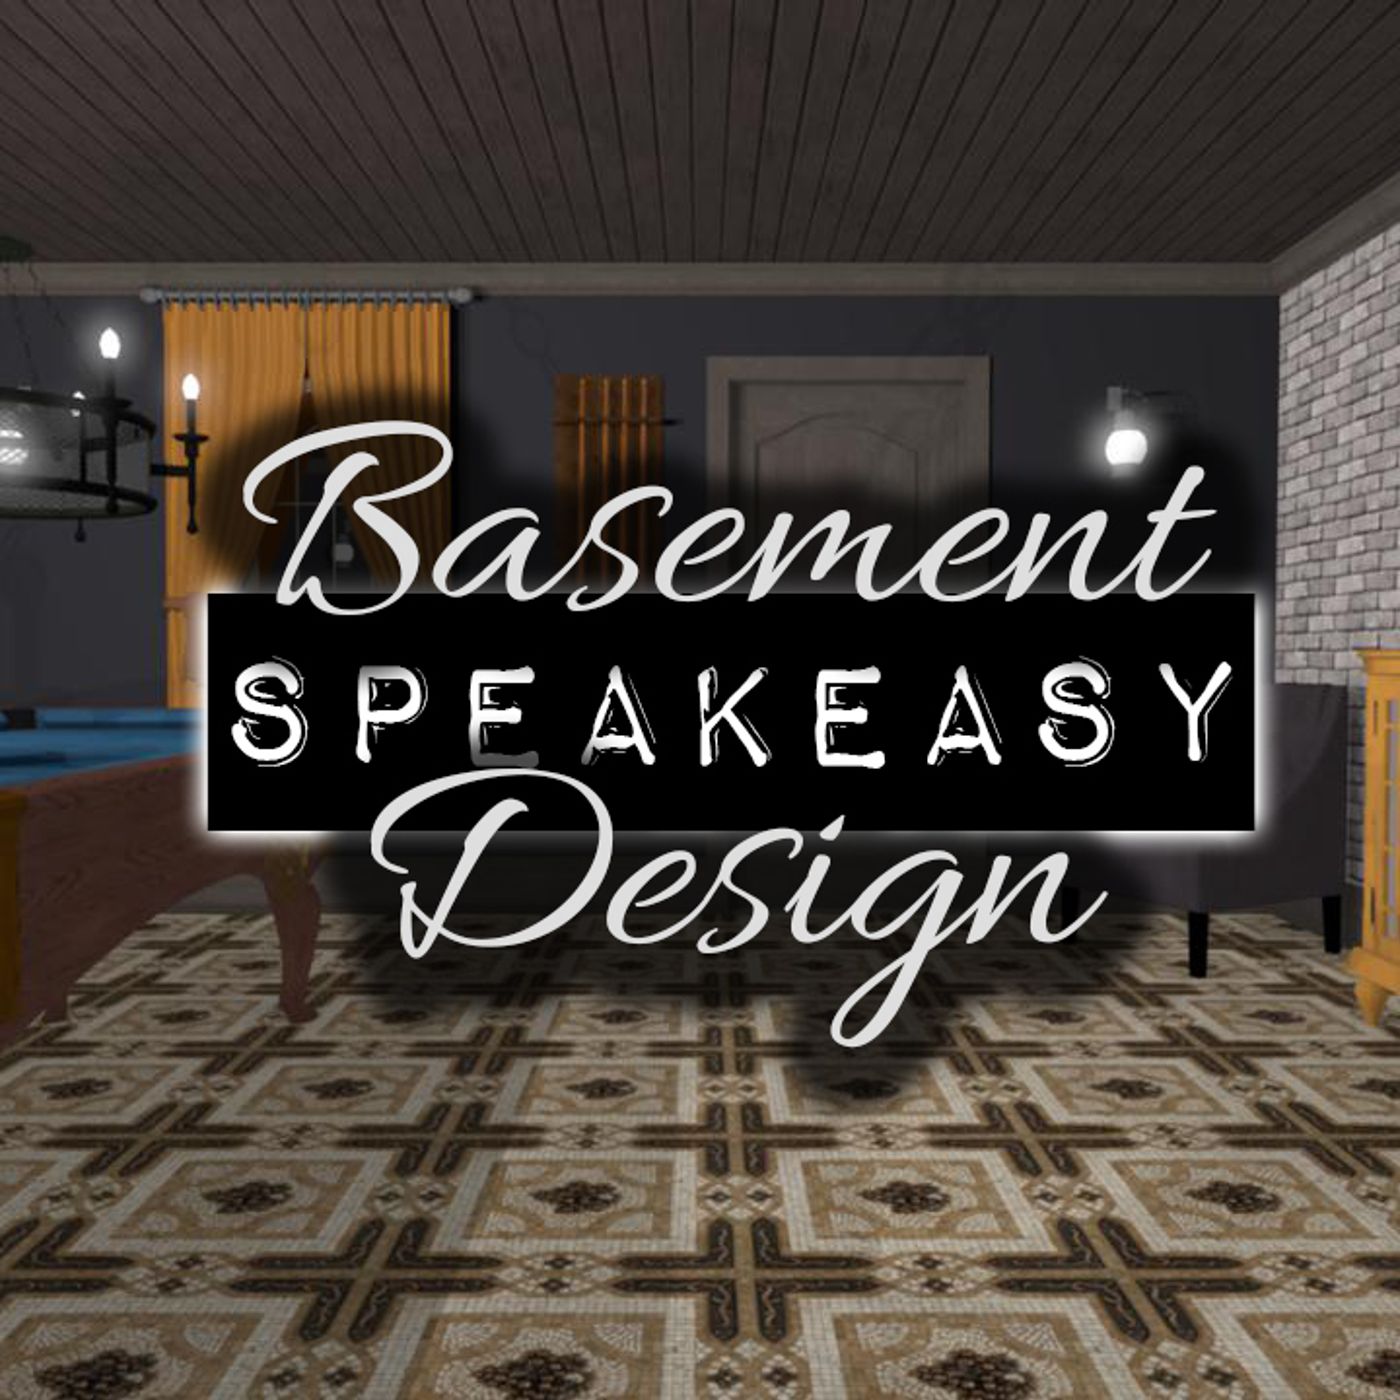 Basement Speakeasy Design | DIY & Home Improvement